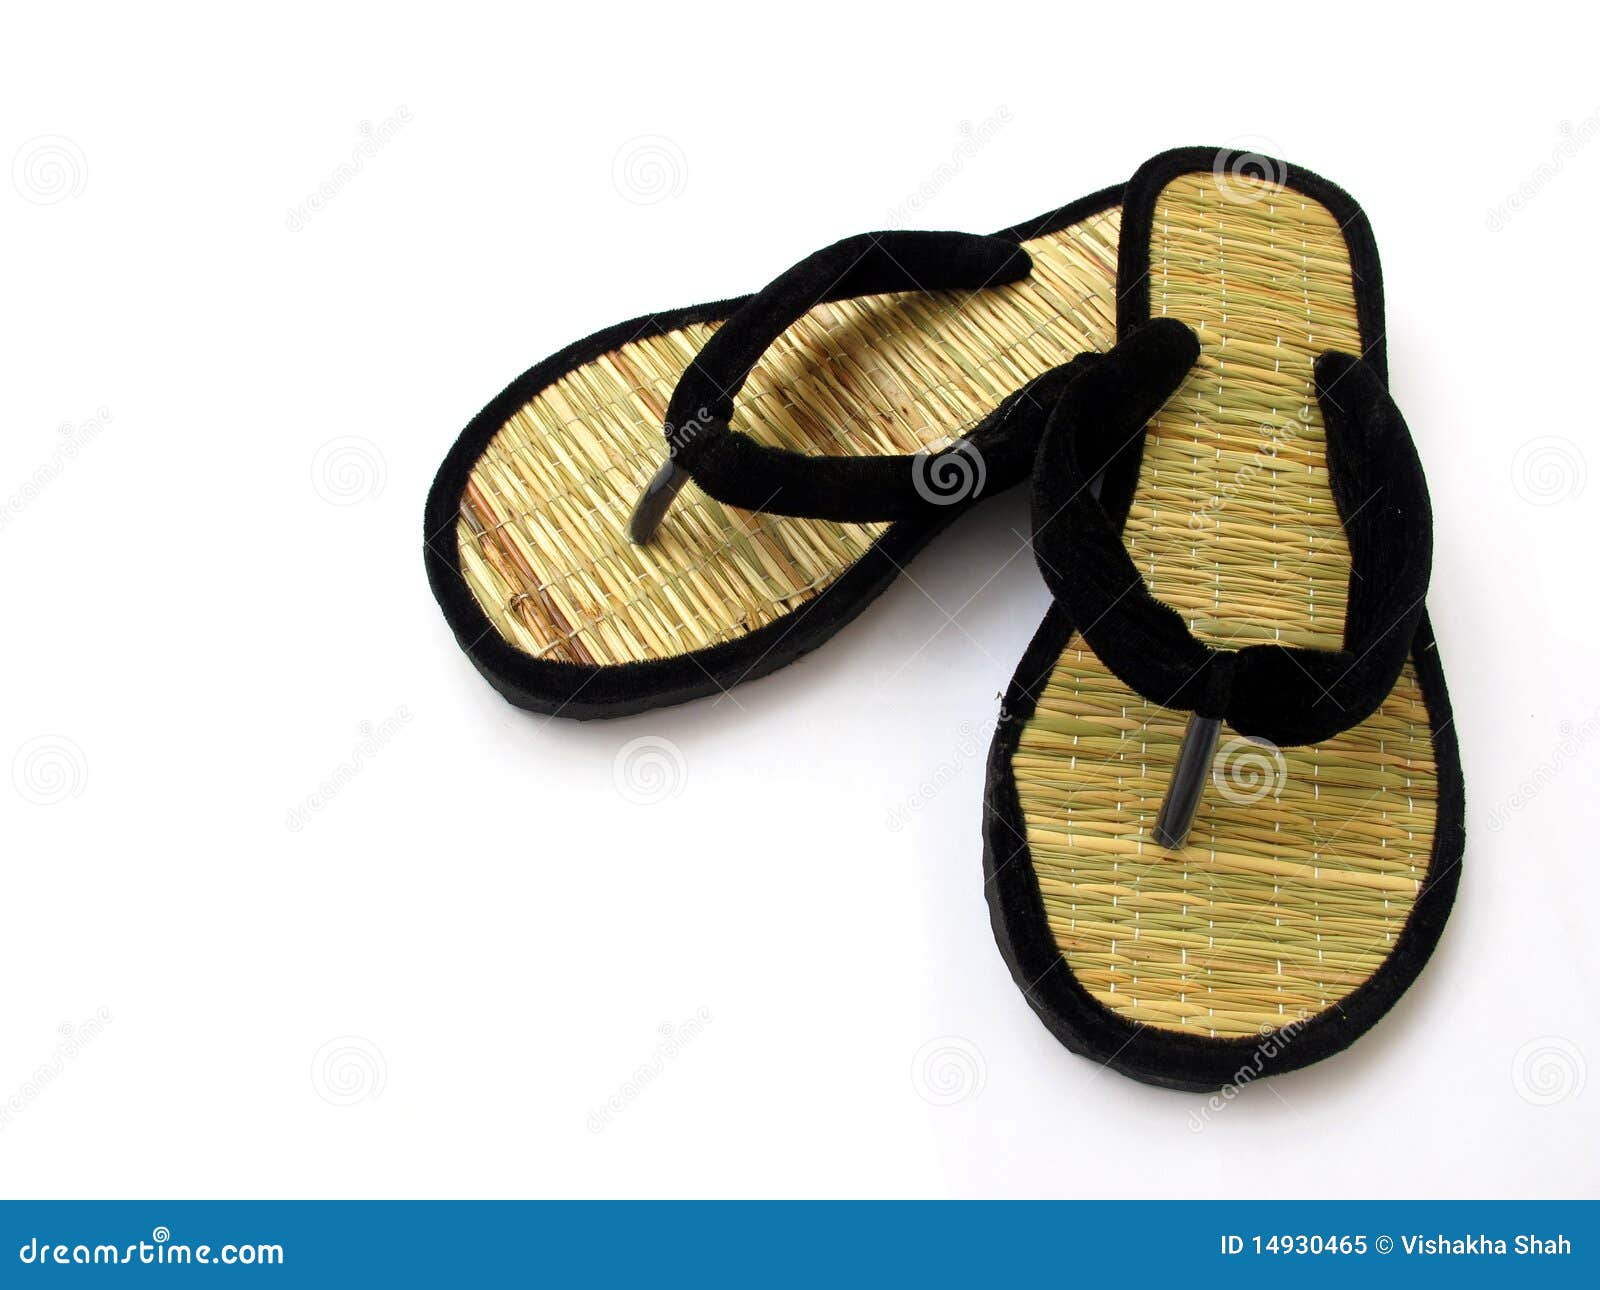 osho slippers